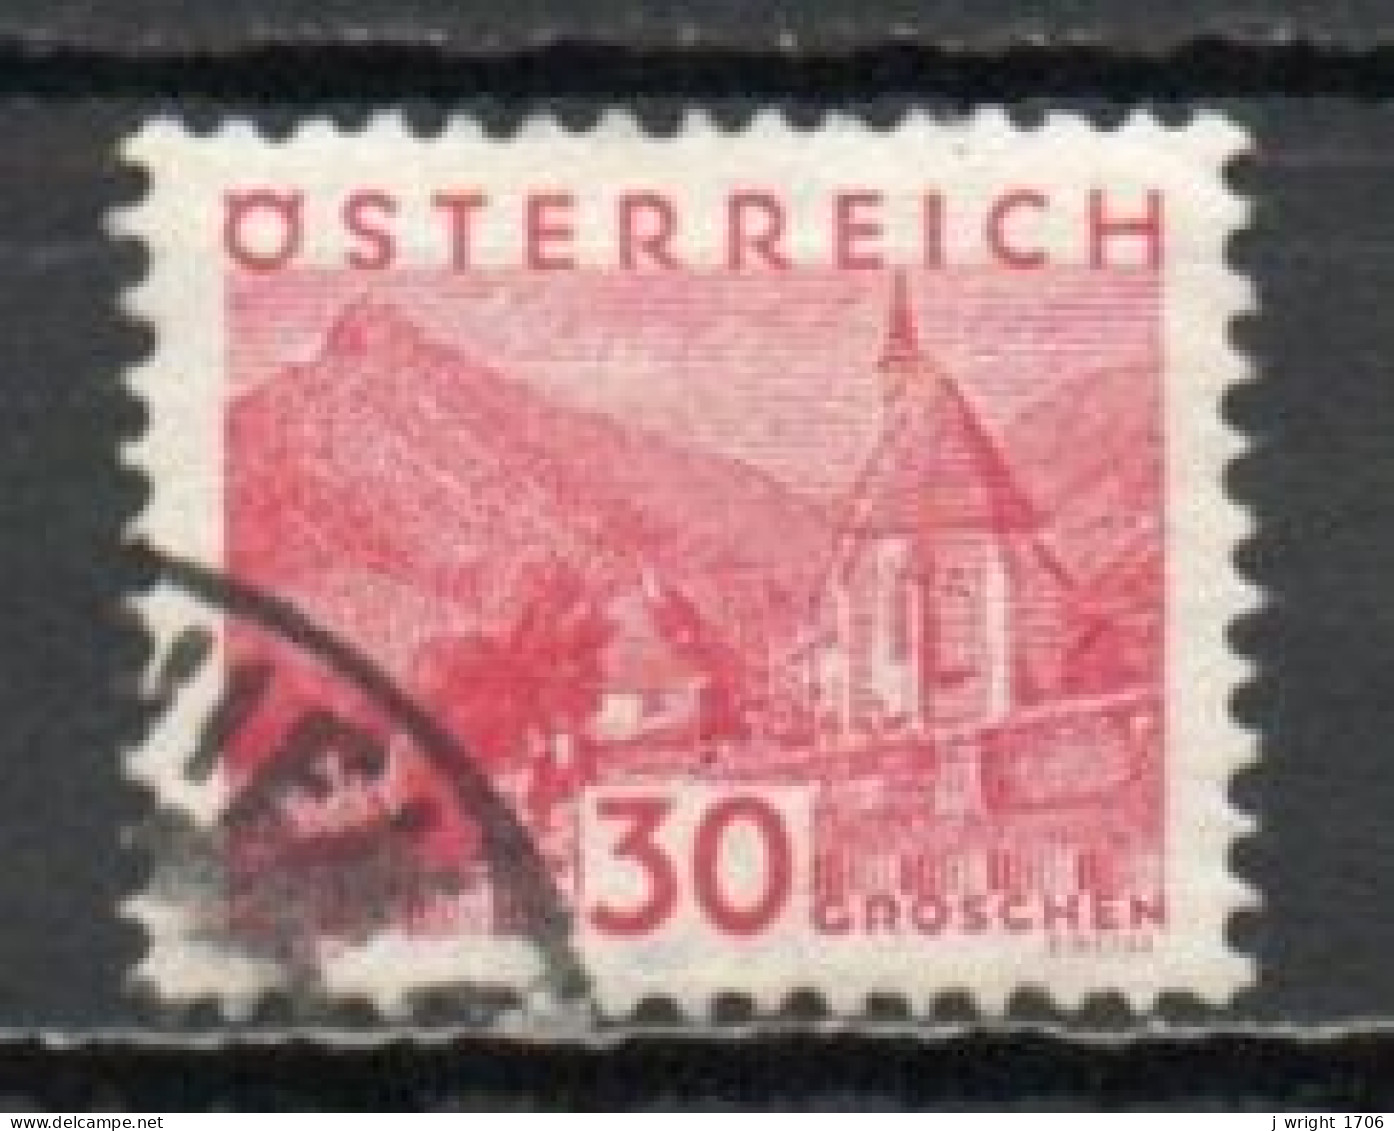 Austria, 1932, Landscapes Small Format/Seewiesen, 30g/Red, USED - Oblitérés